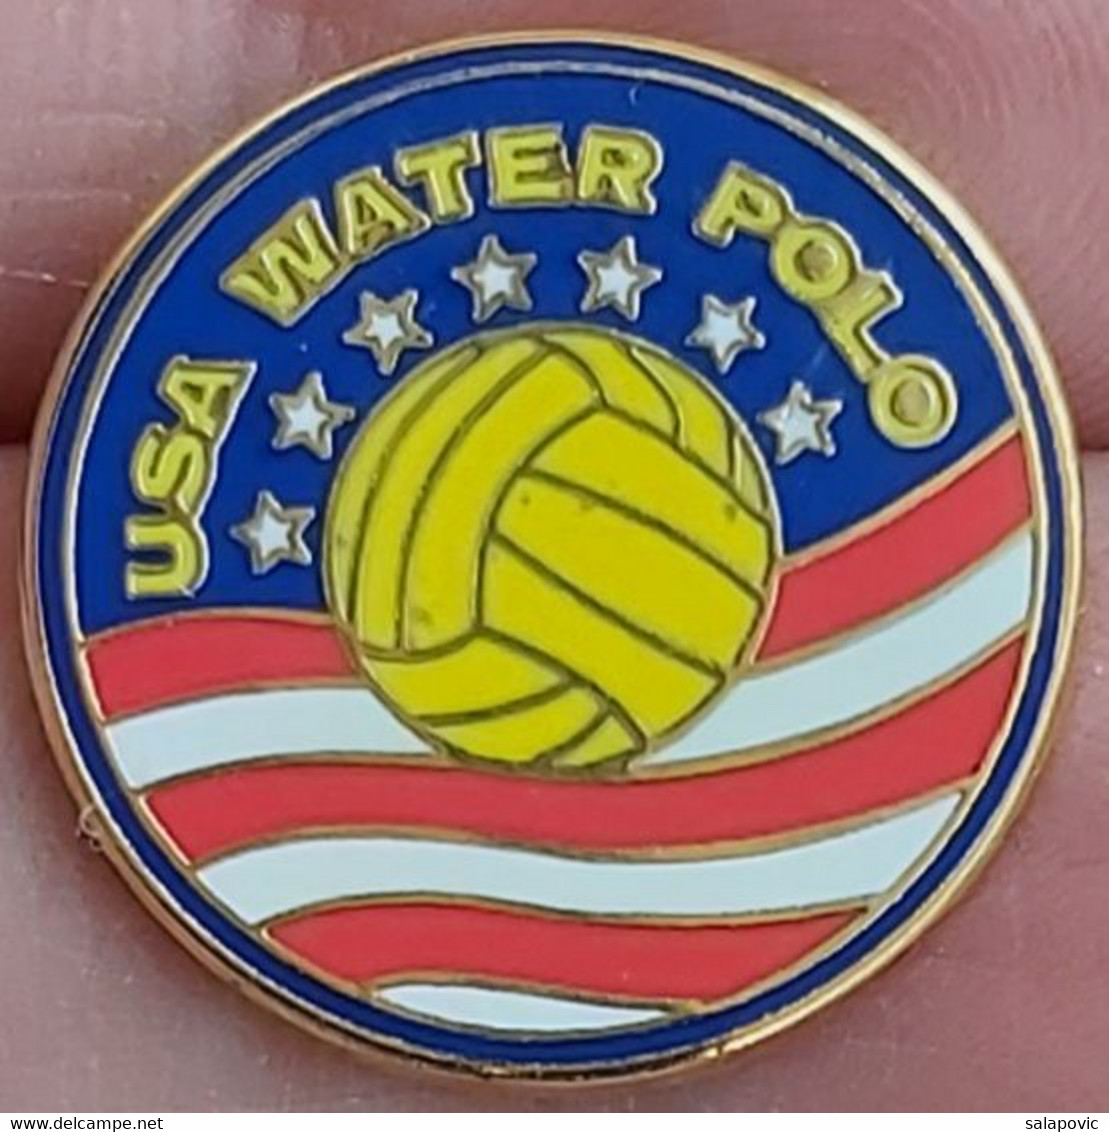 USA WATER POLO Federation Union Association PIN A7/7 - Water Polo